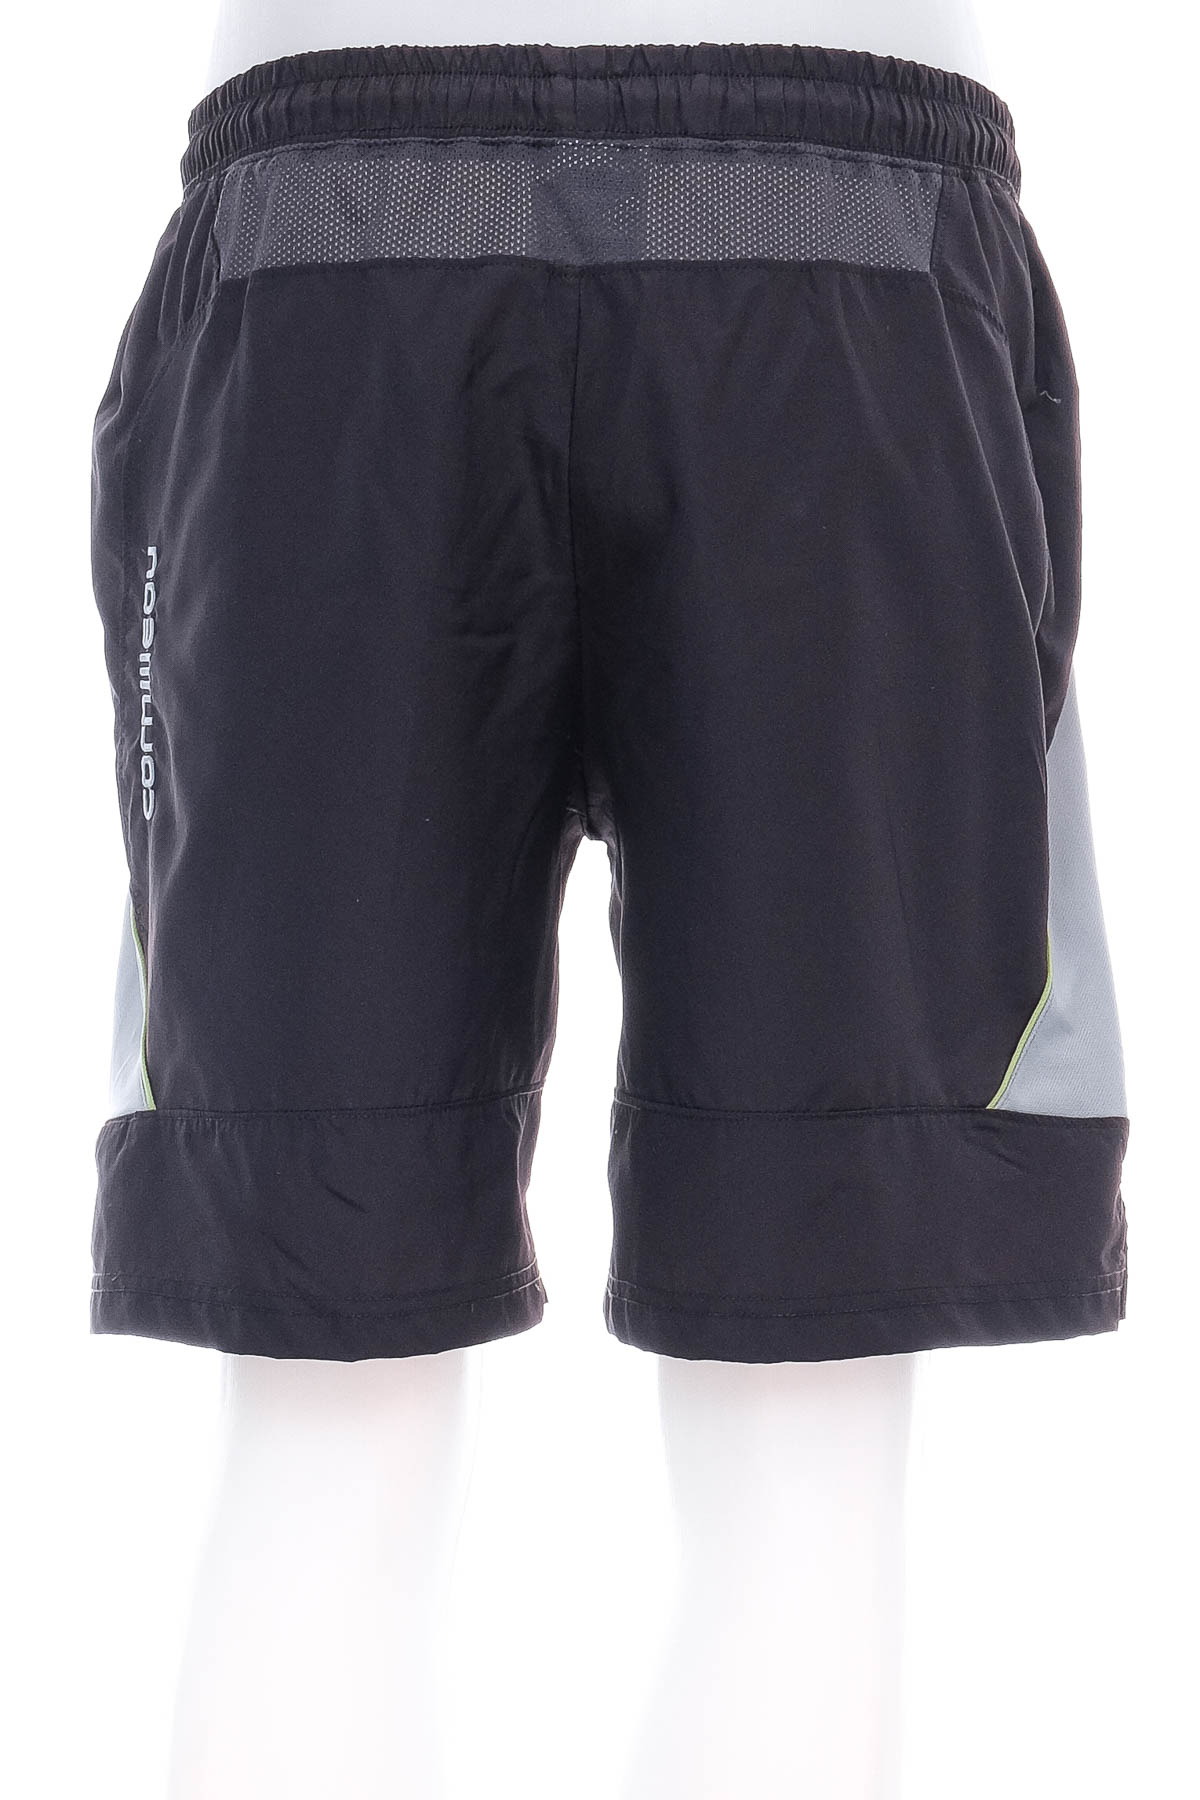 Men's shorts - CORNILLEAU - 1